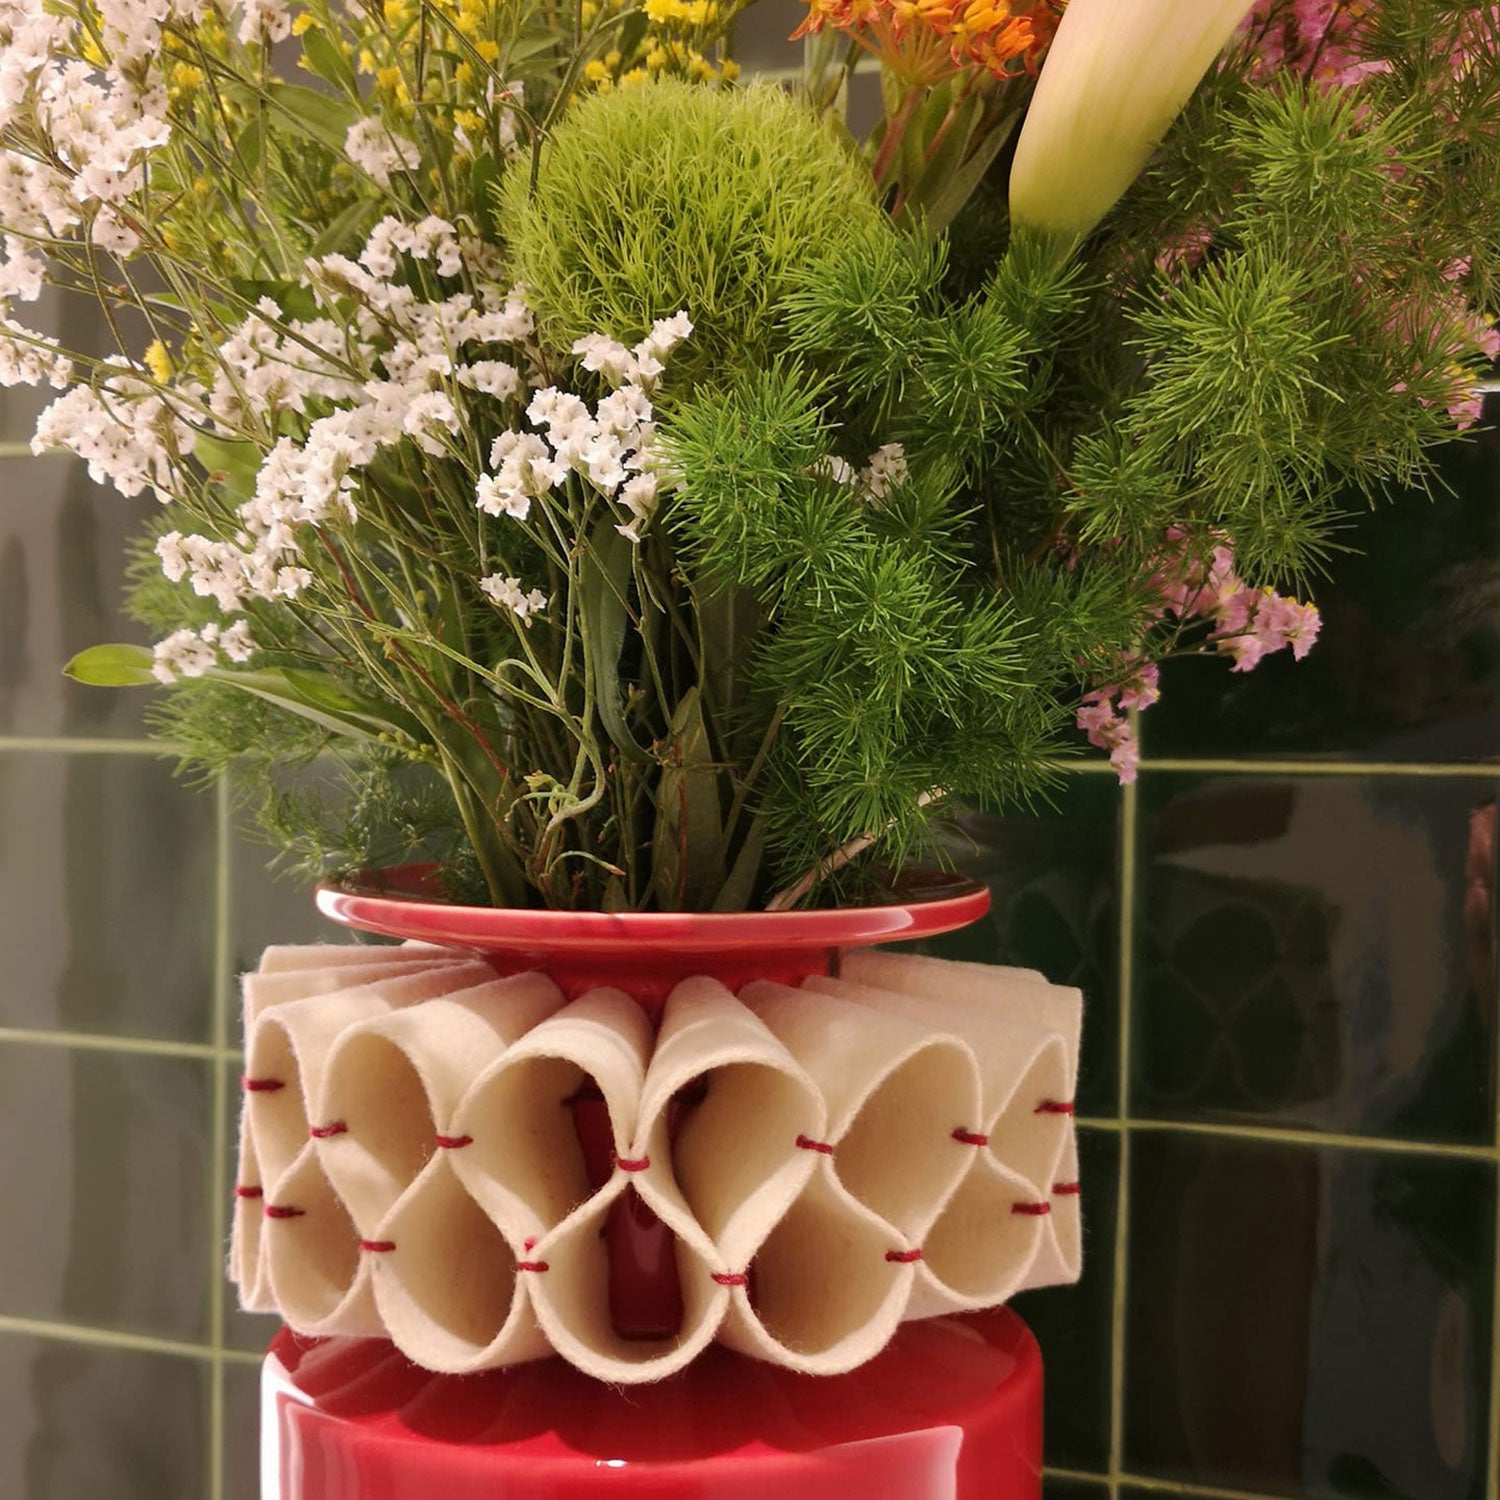 Hand Painted Portuguese Ceramic Decorative Flower Vase - The Ruff Vase